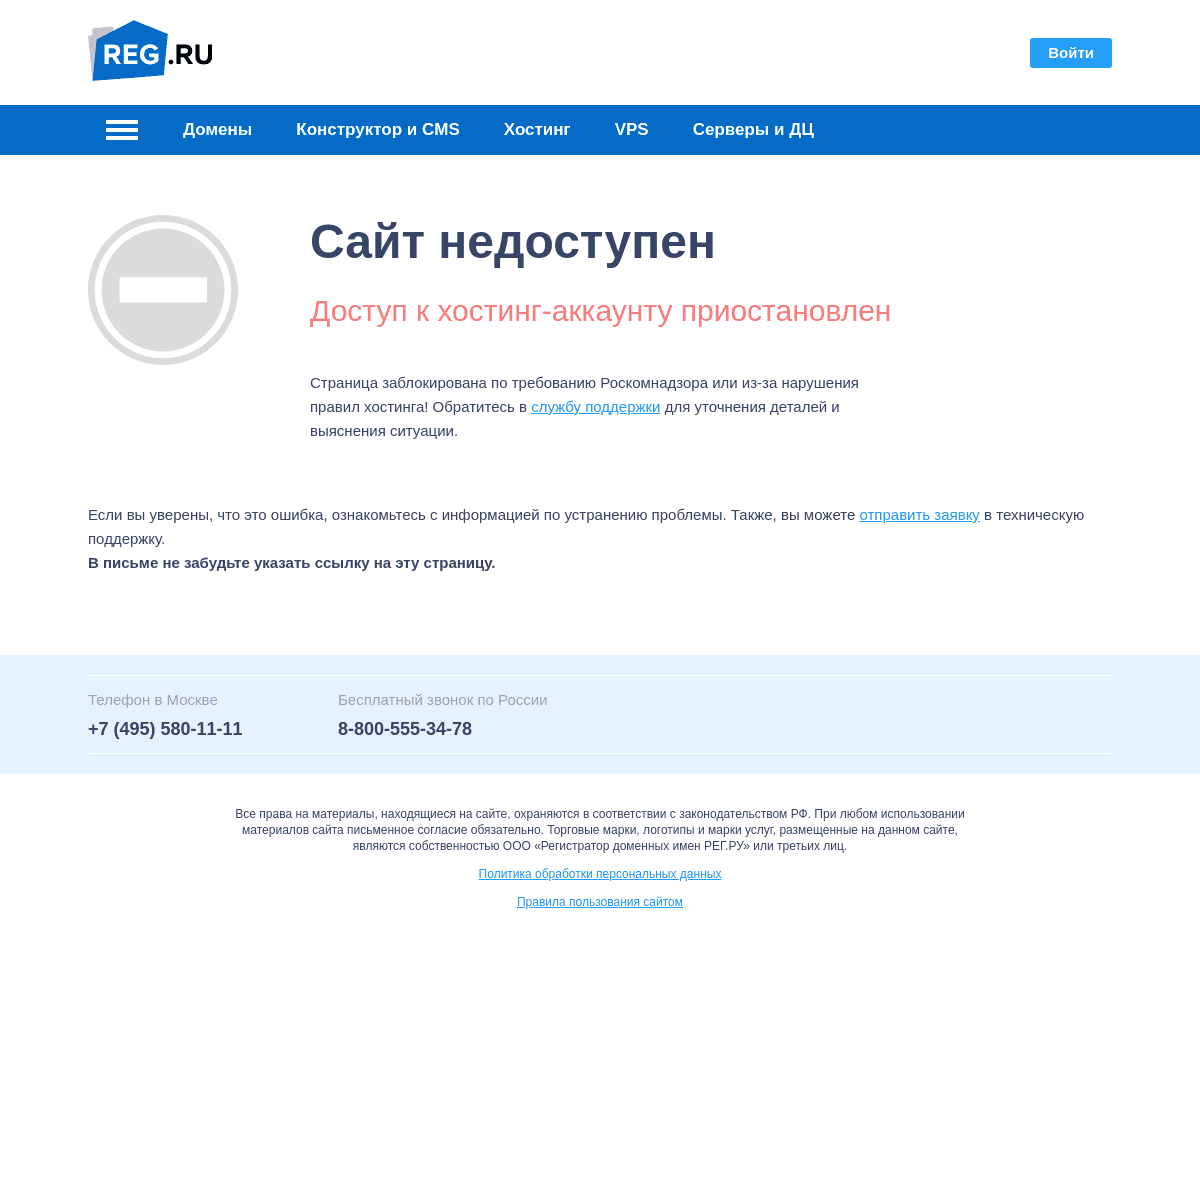 A complete backup of https://premiumfiller.ru